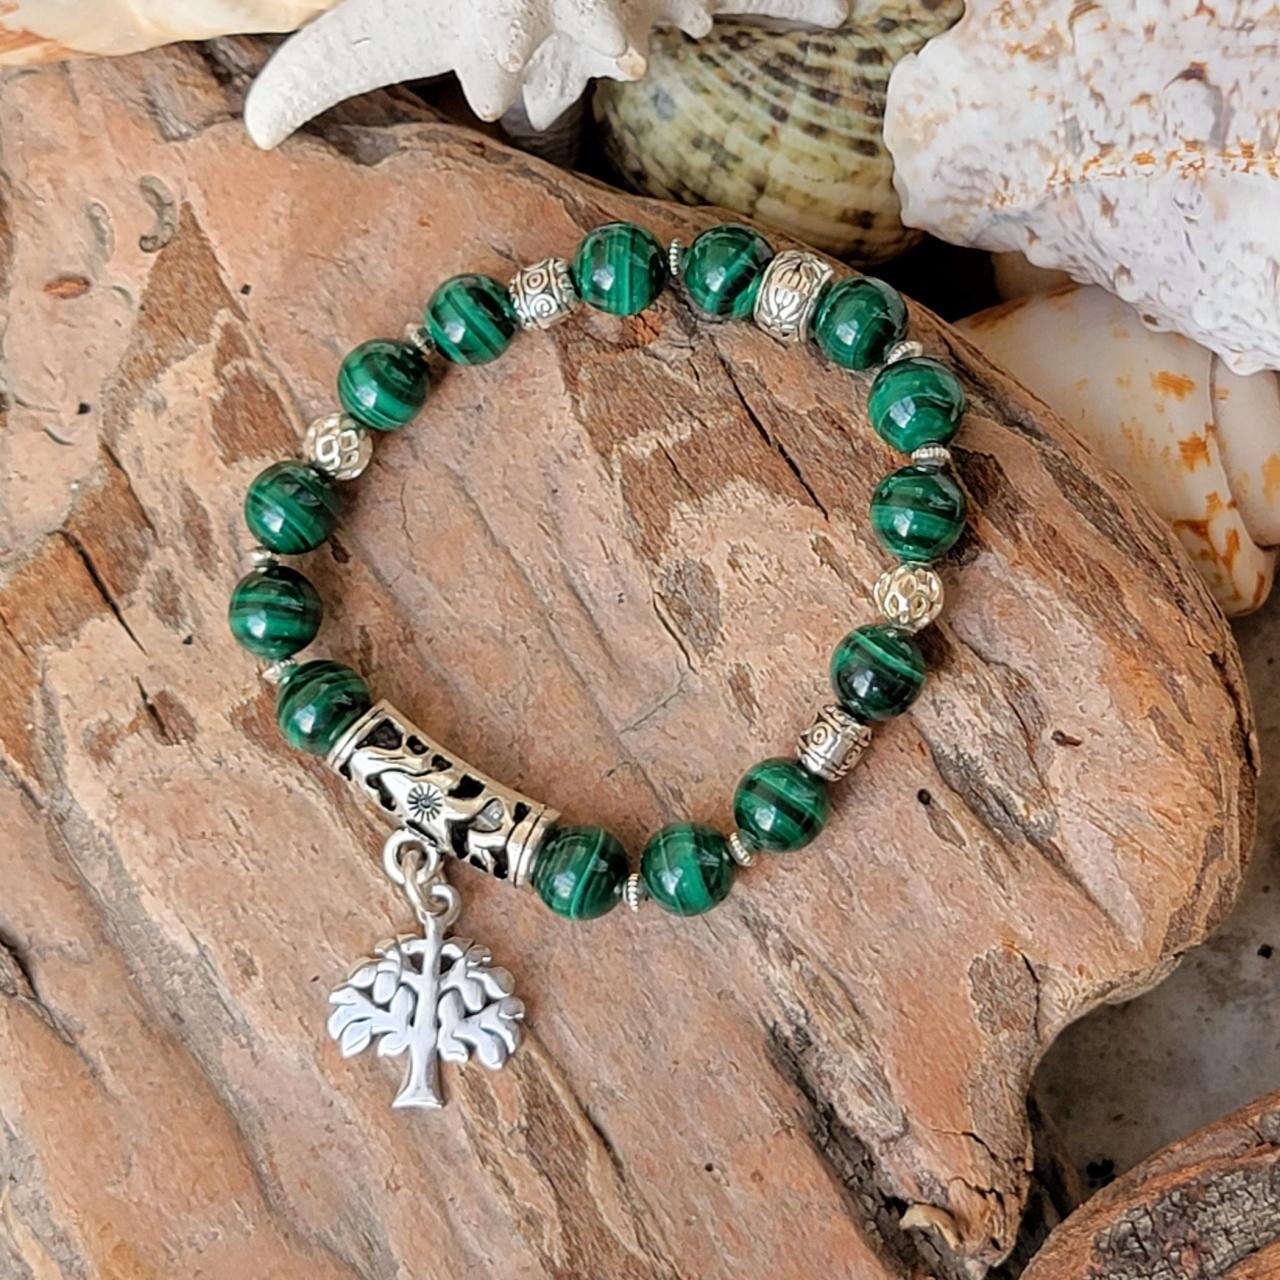 Malachite Natural Healing Gemstone Bracelet With Tree Of Life Charm